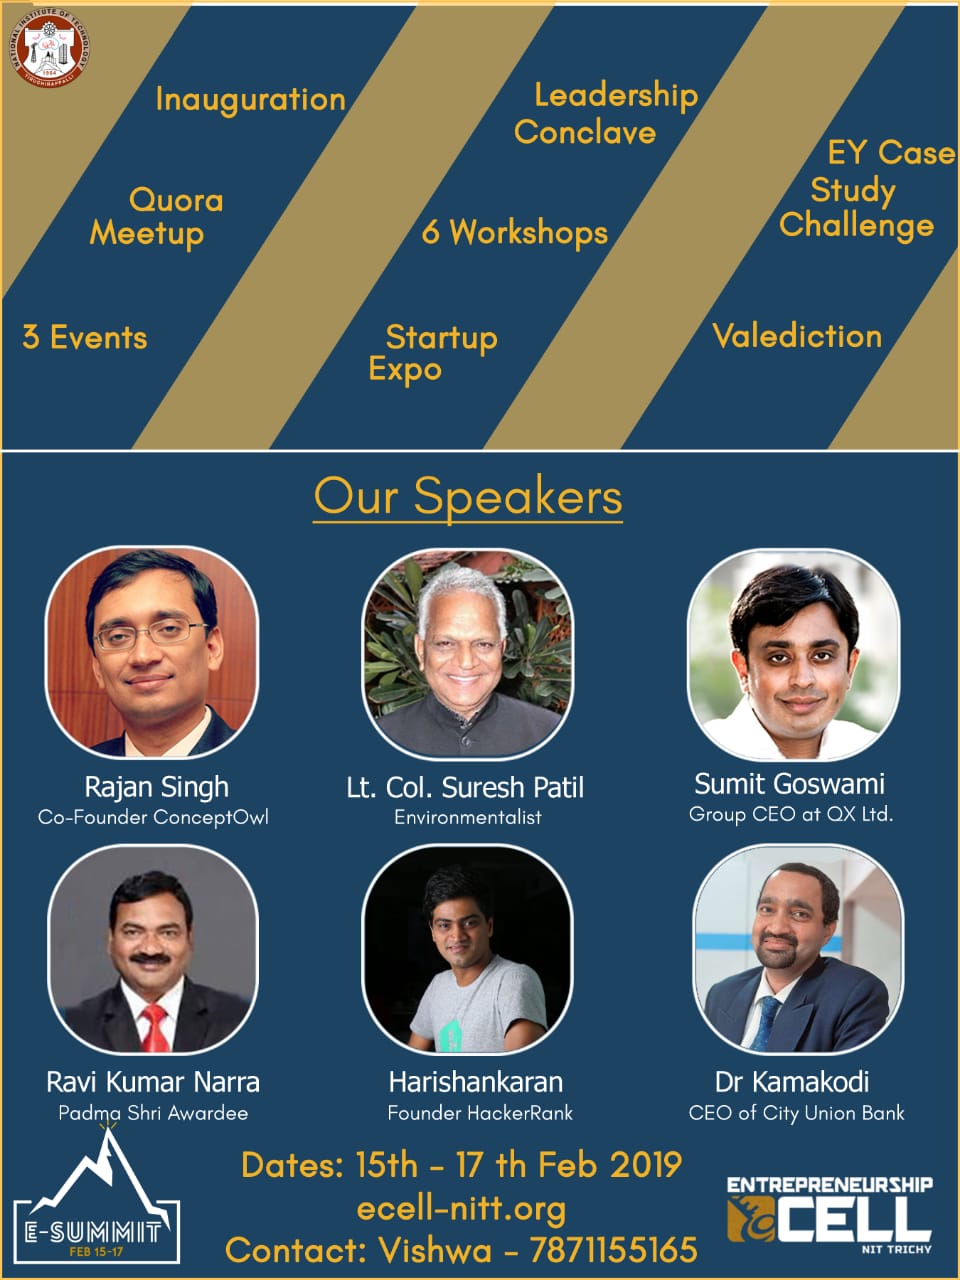 Entrepreneurship Summit, Tiruchirappalli, Tamil Nadu, India